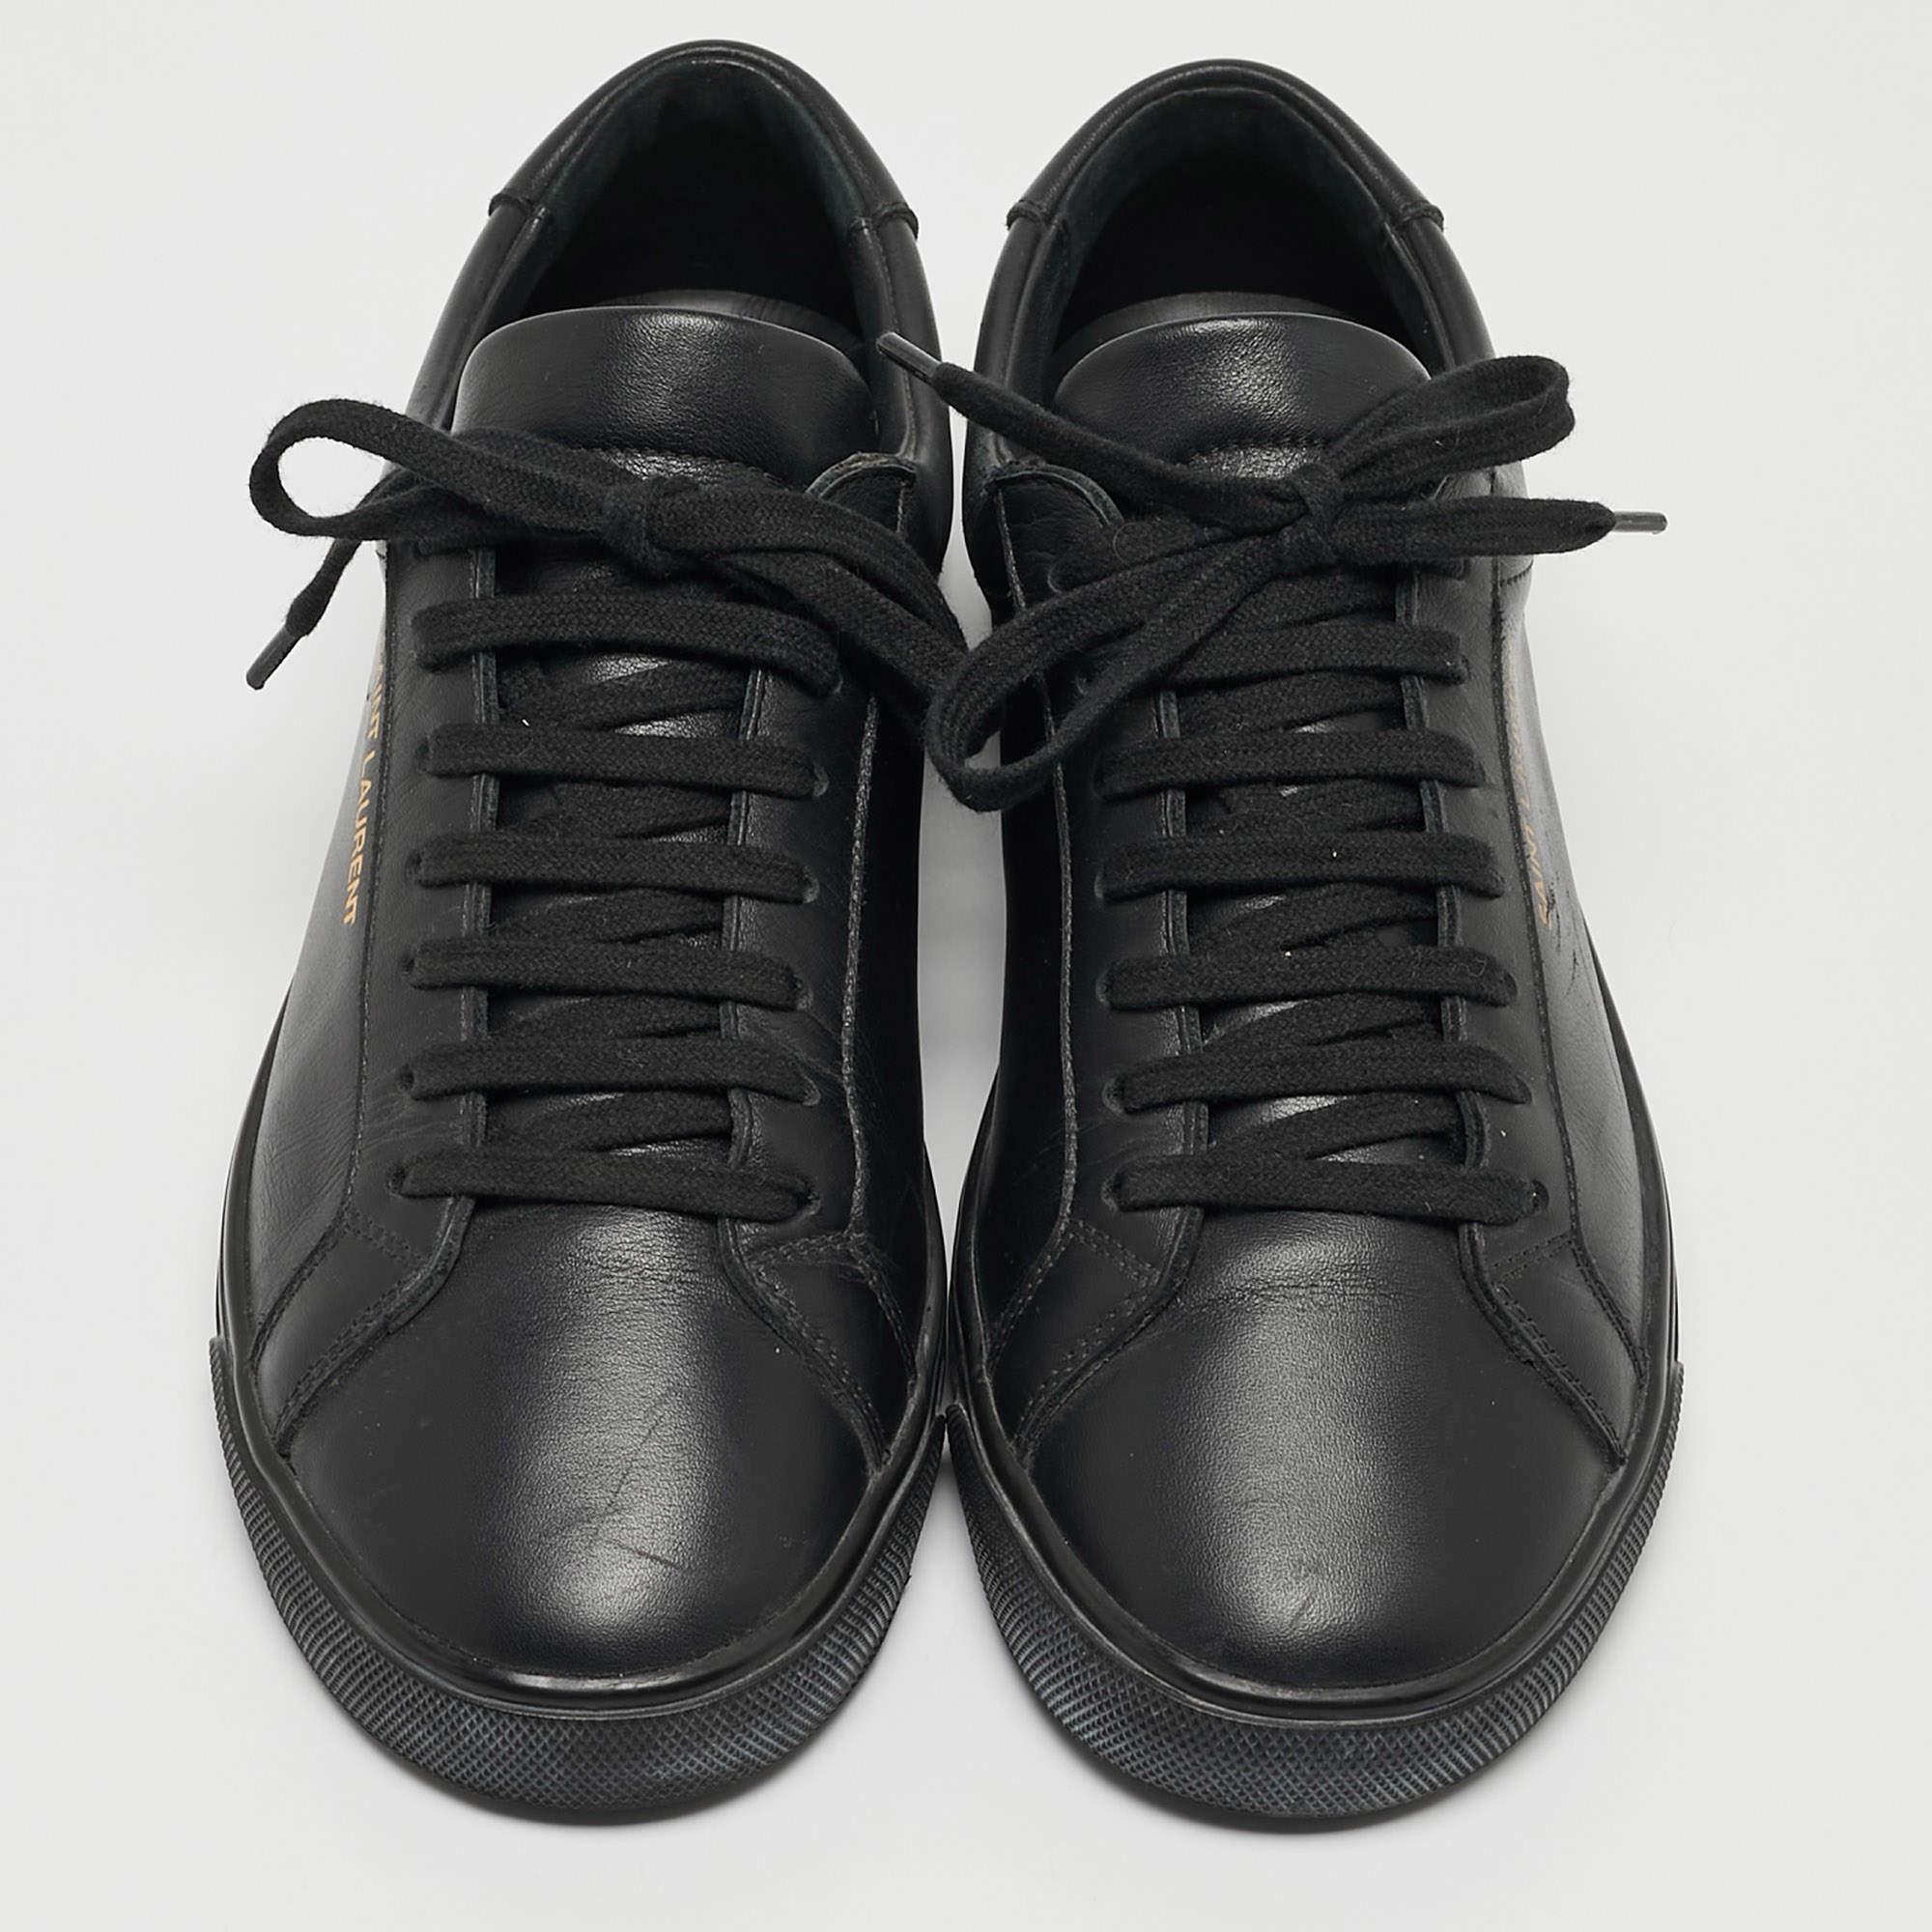 Saint Laurent Black Leather Andy Low Top Sneakers Size 37.5 In Good Condition For Sale In Dubai, Al Qouz 2